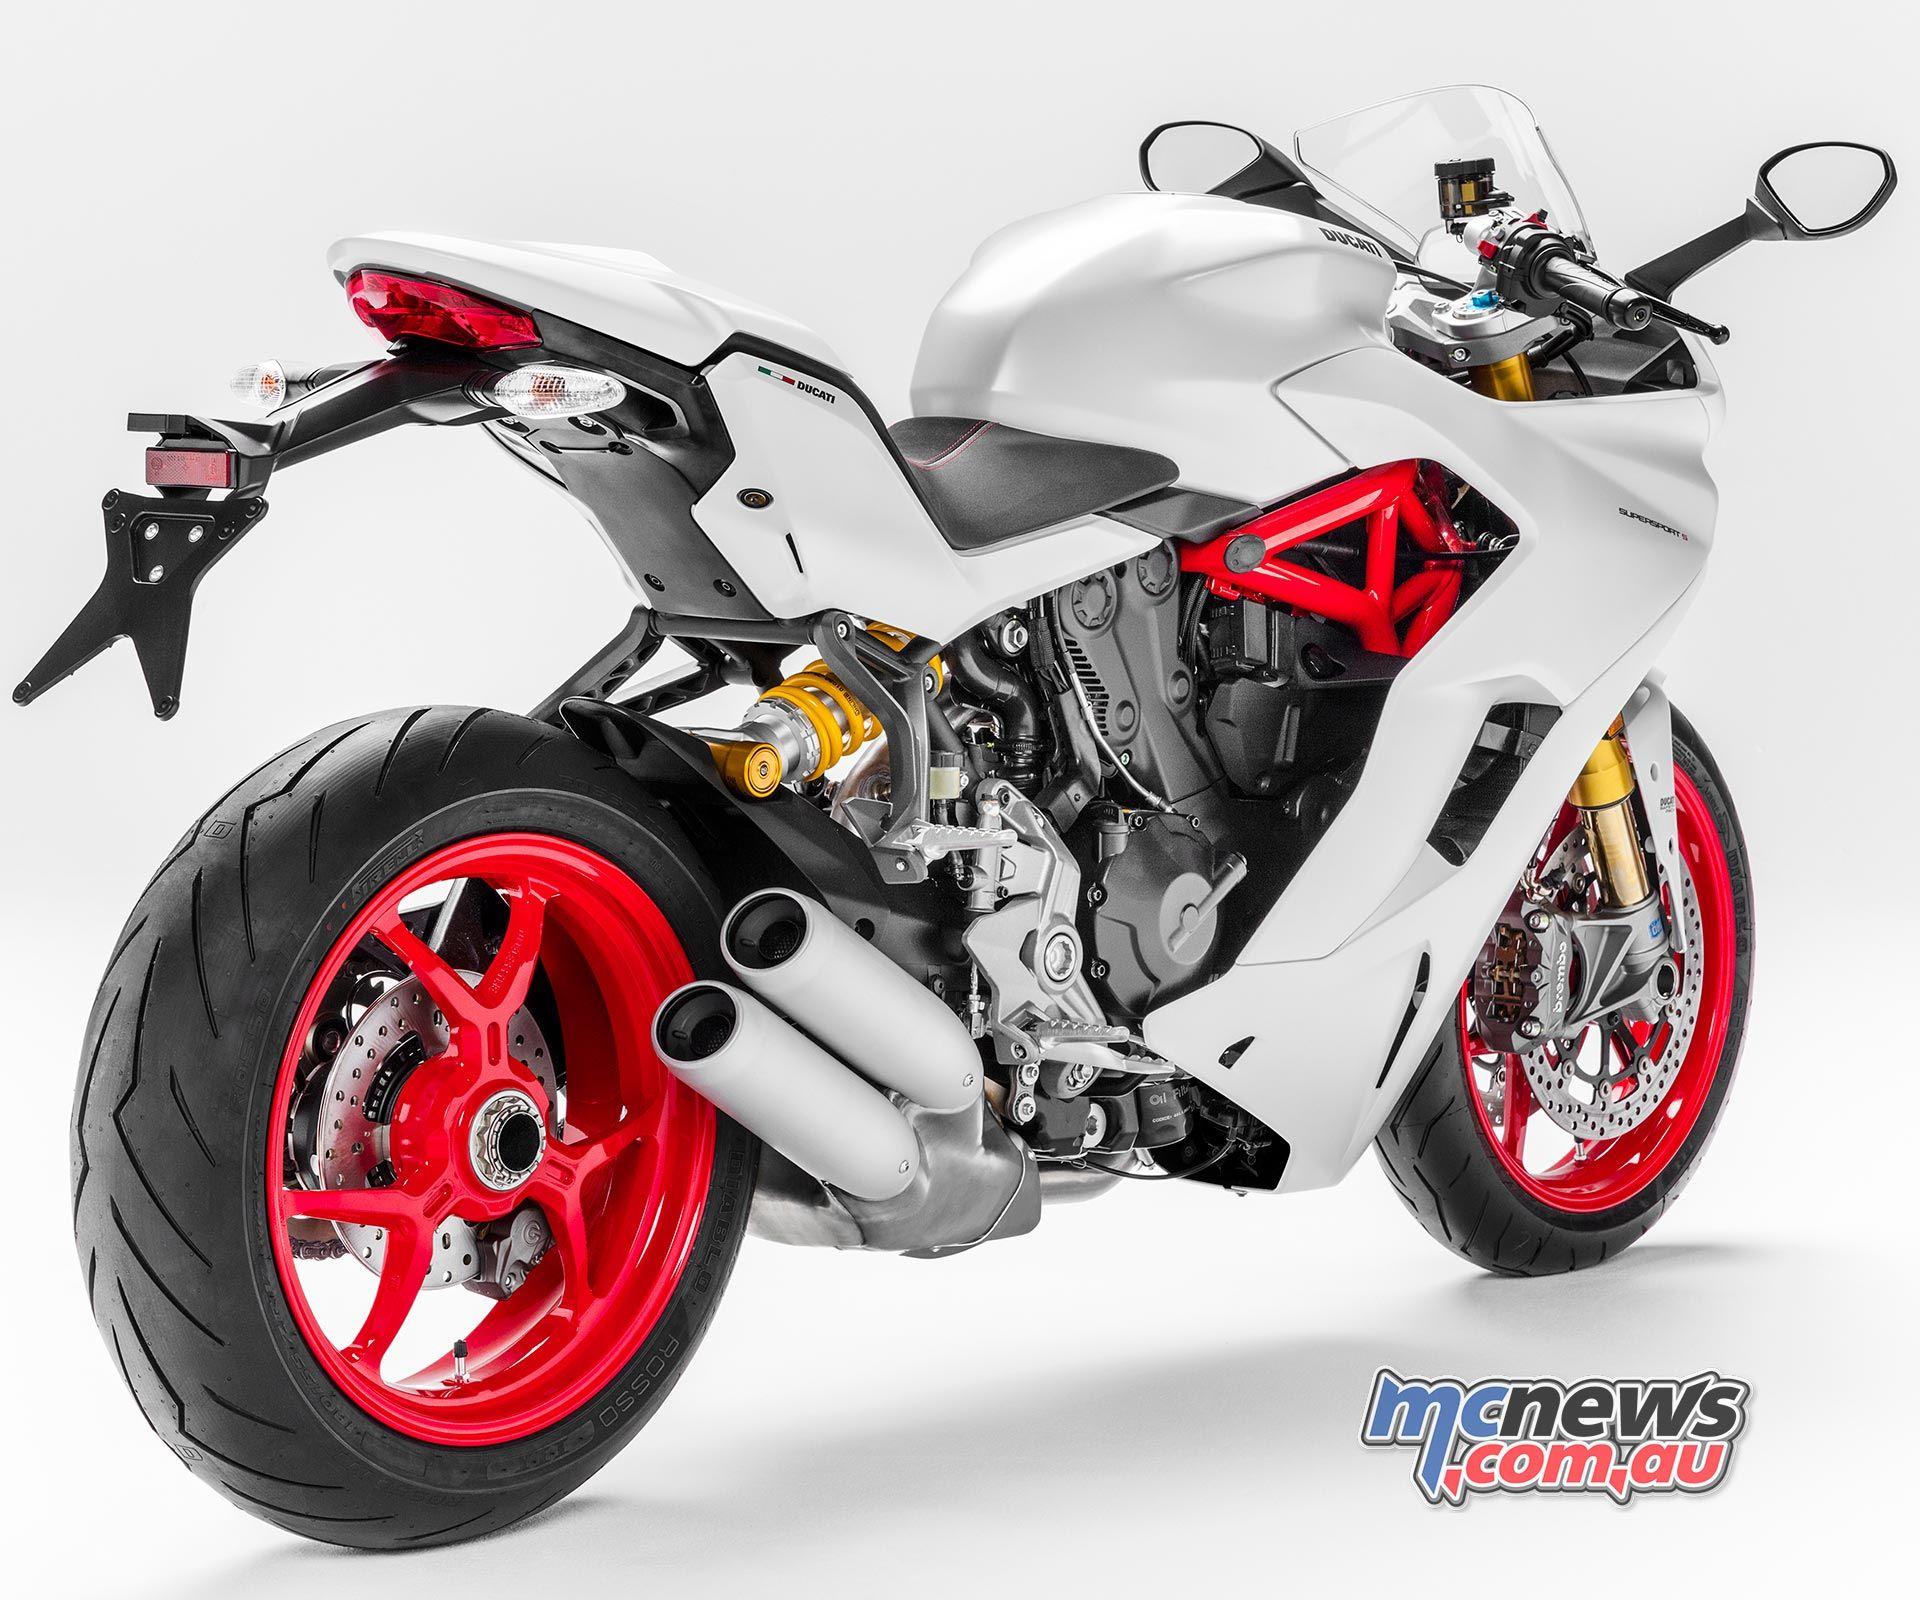 937cc Ducati Supersporthp. S model gets Ohlins